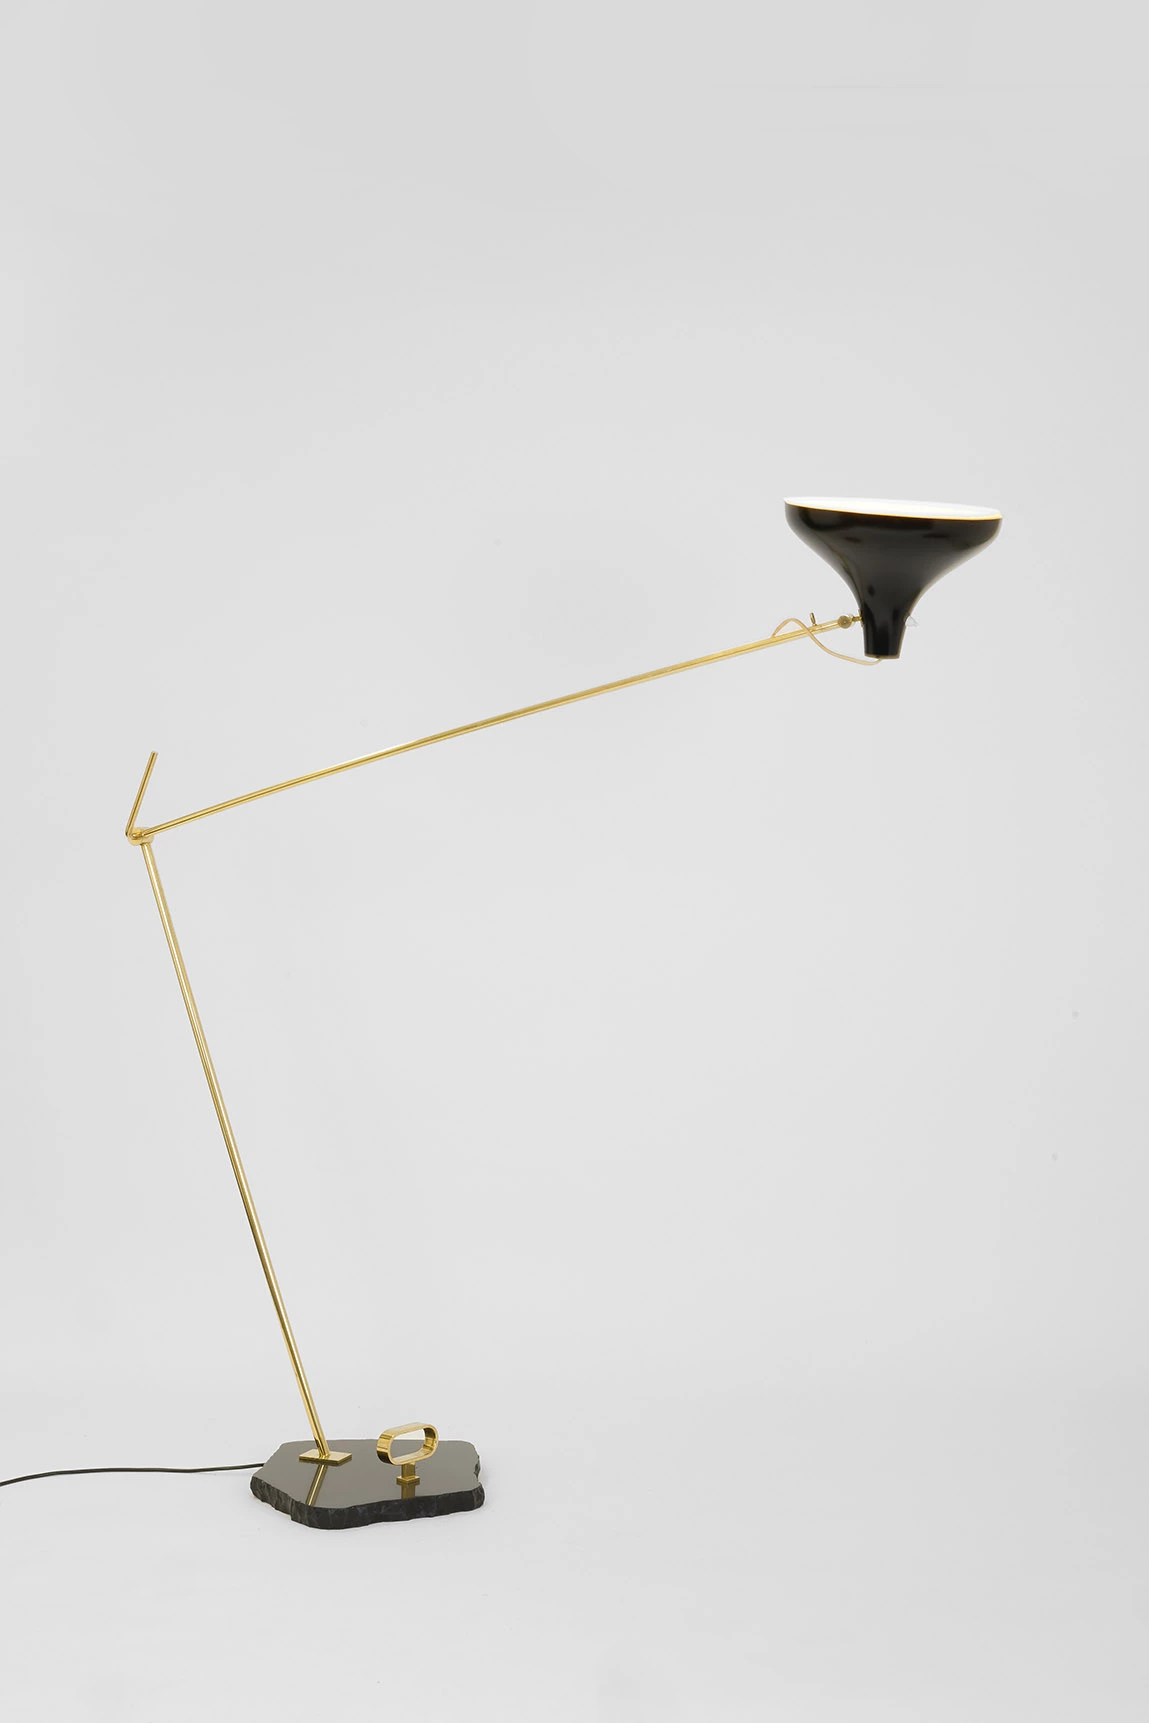 1033a - Gino Sarfatti - Floor light - Galerie kreo